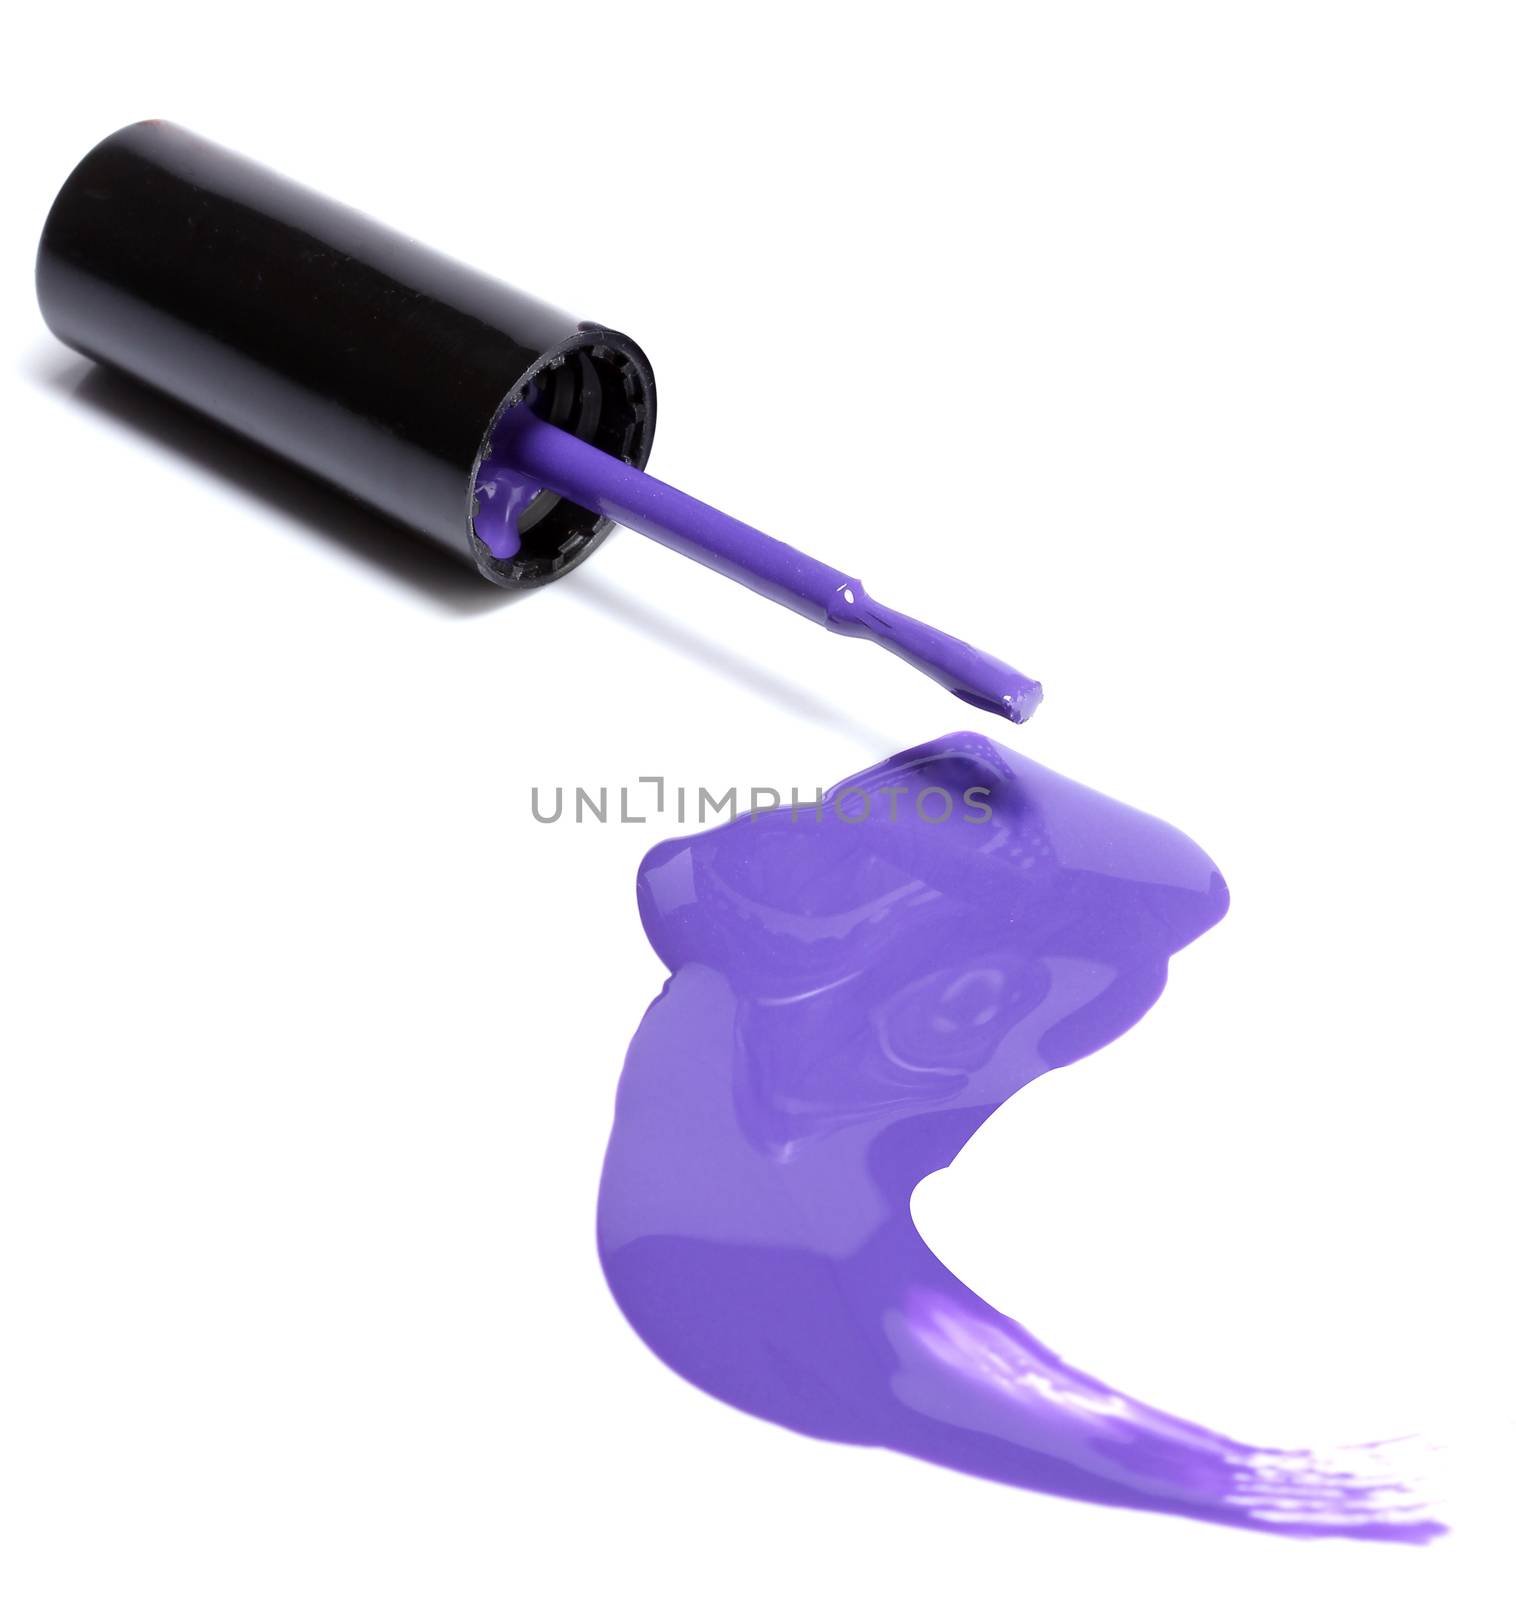 Violet nail polish spilled on white  by Erdosain